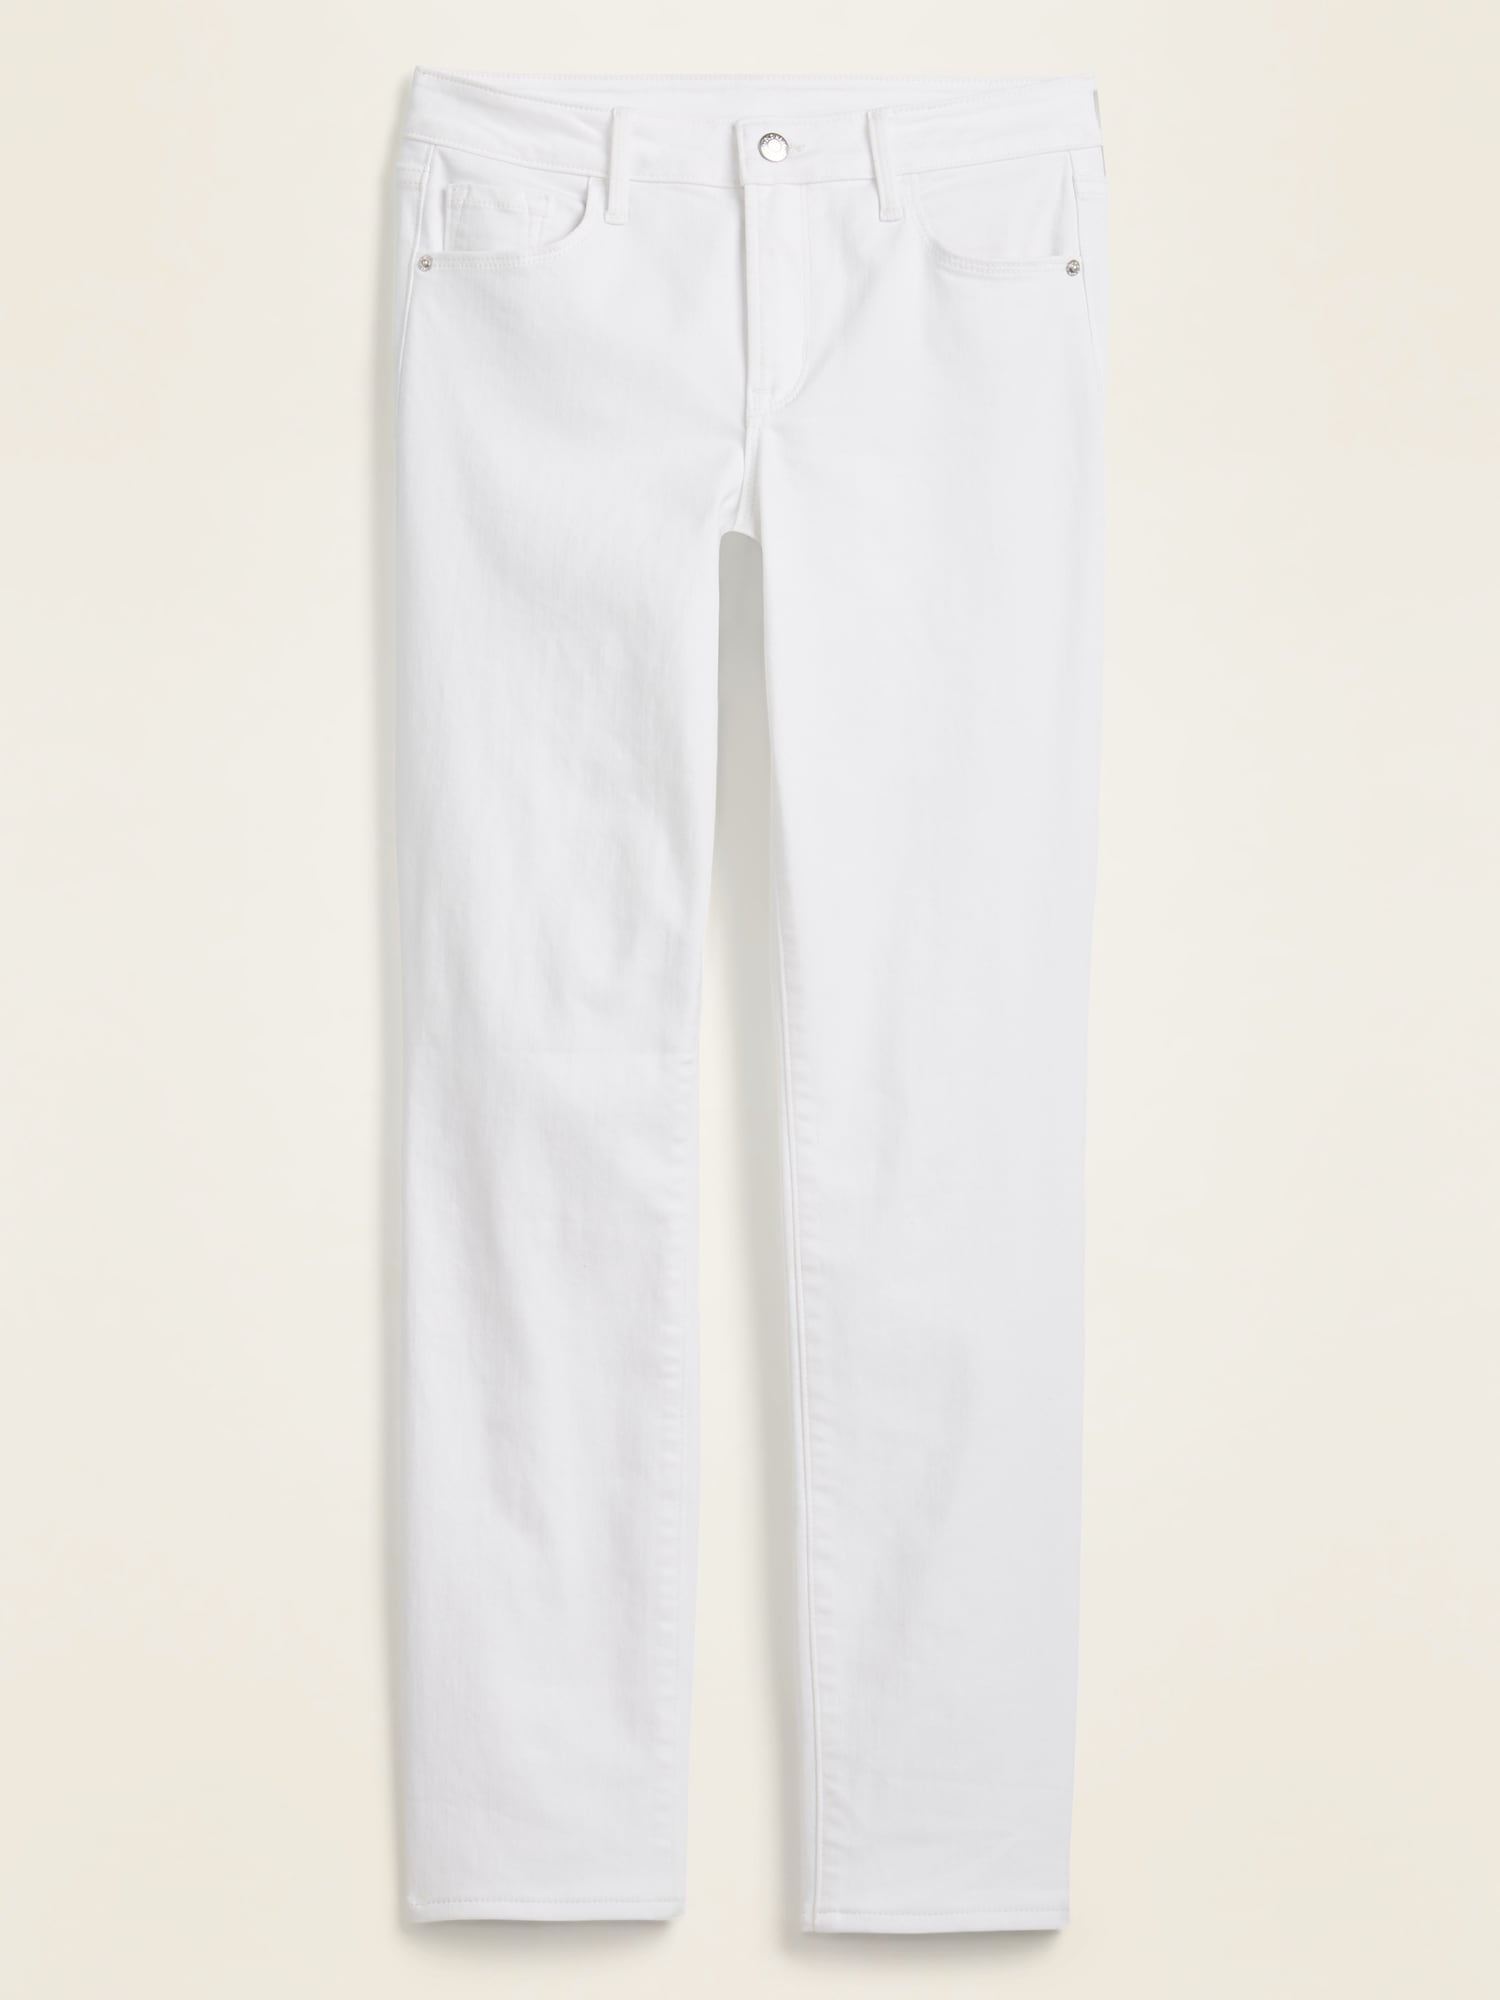 white jeans slim